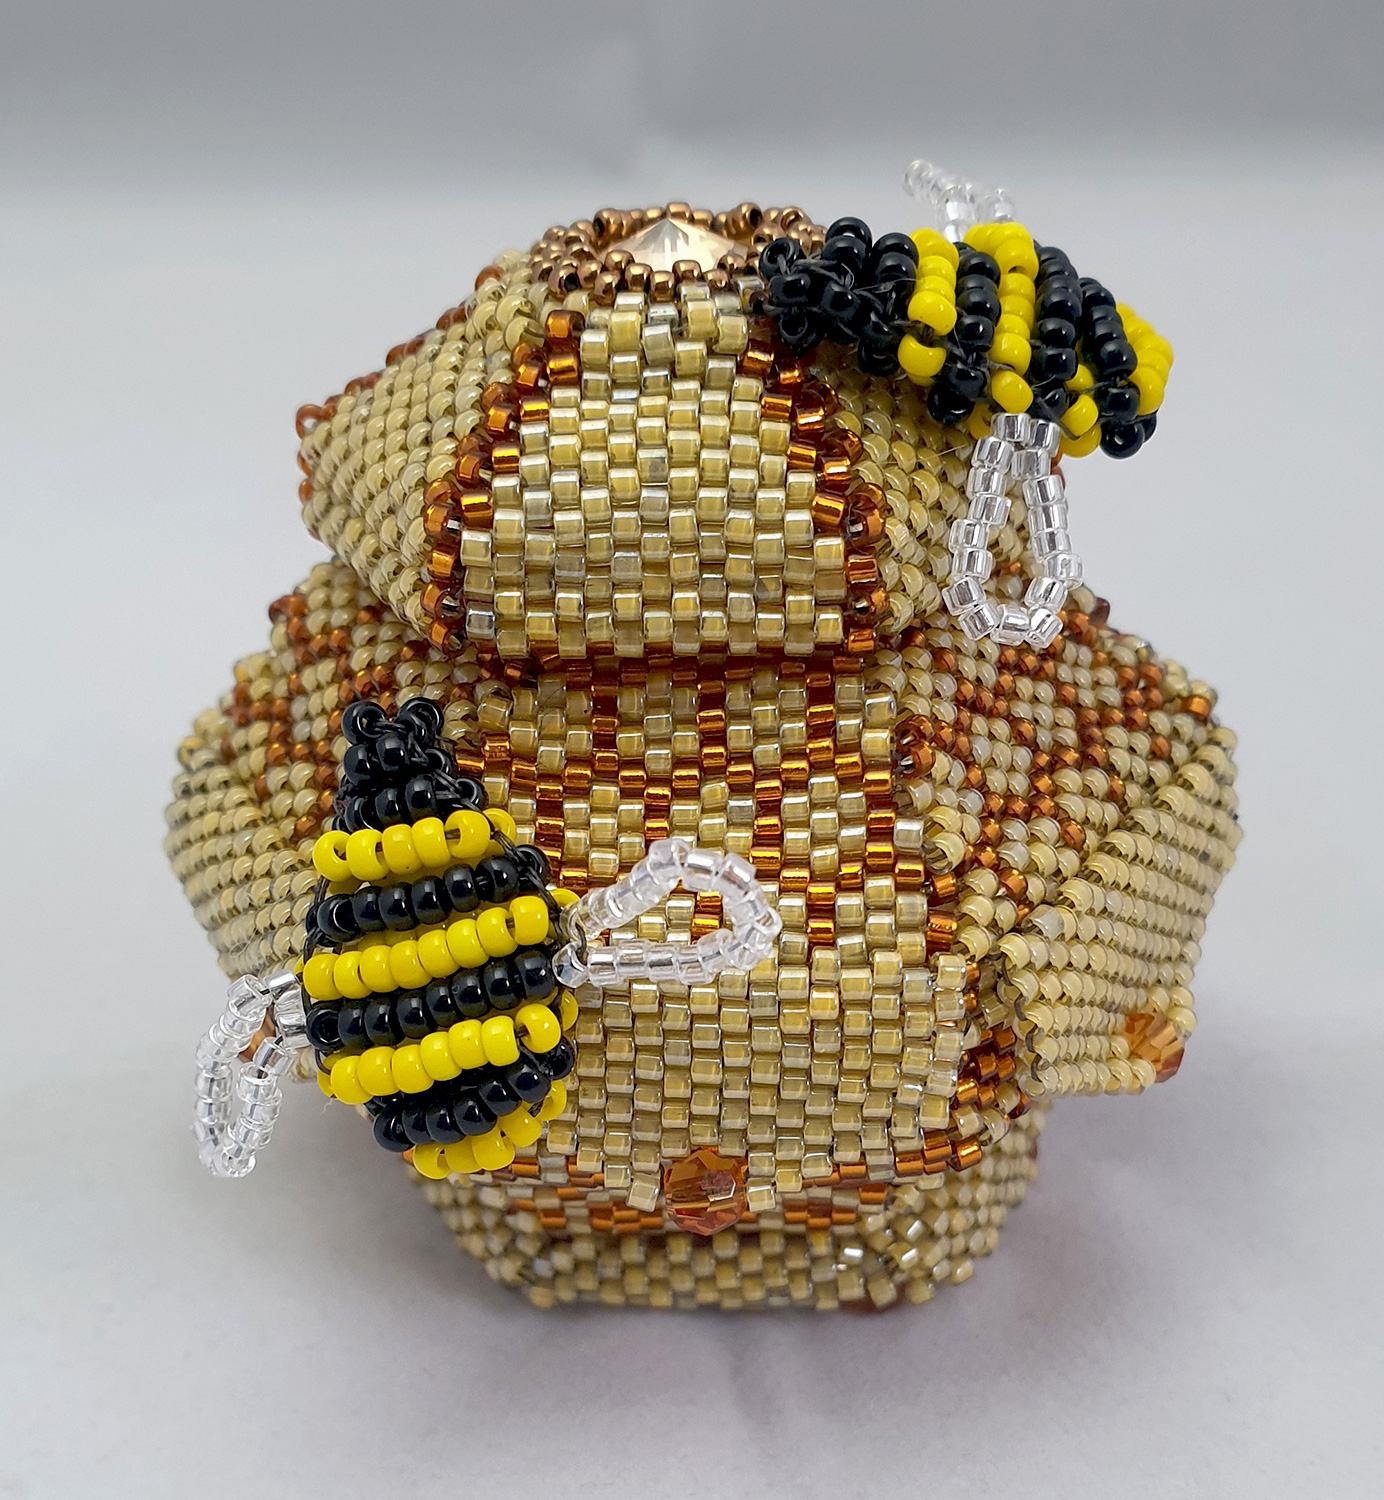 Bienenkorb